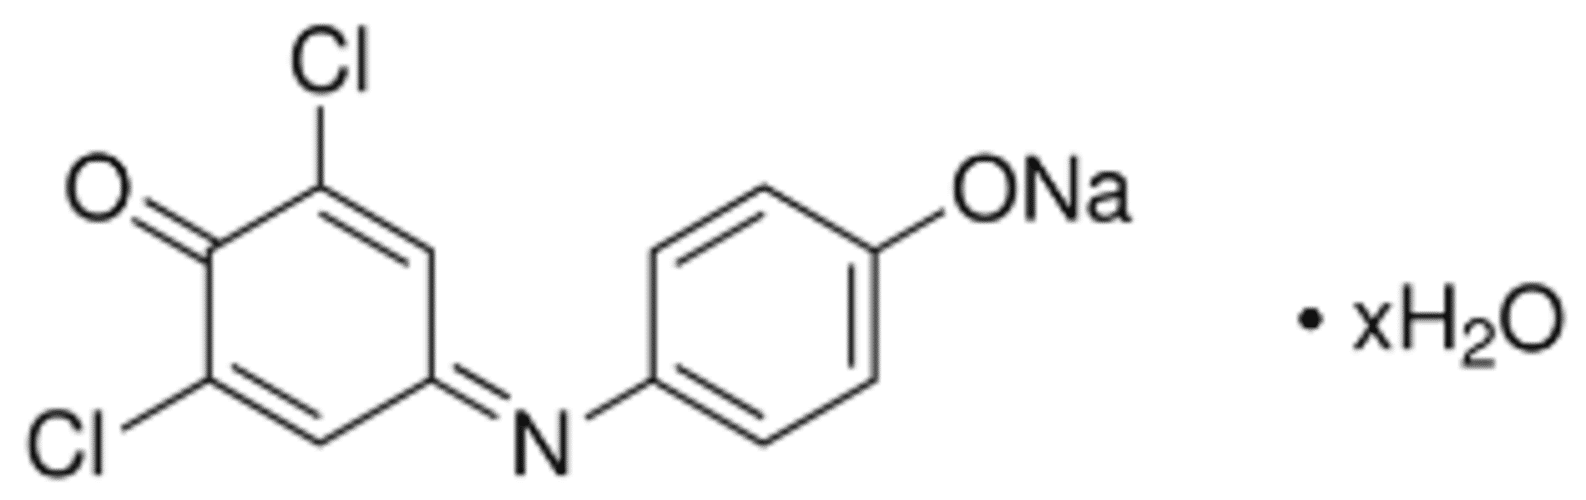 2 6 Dichlorophenol Indophenol Sodium Salt